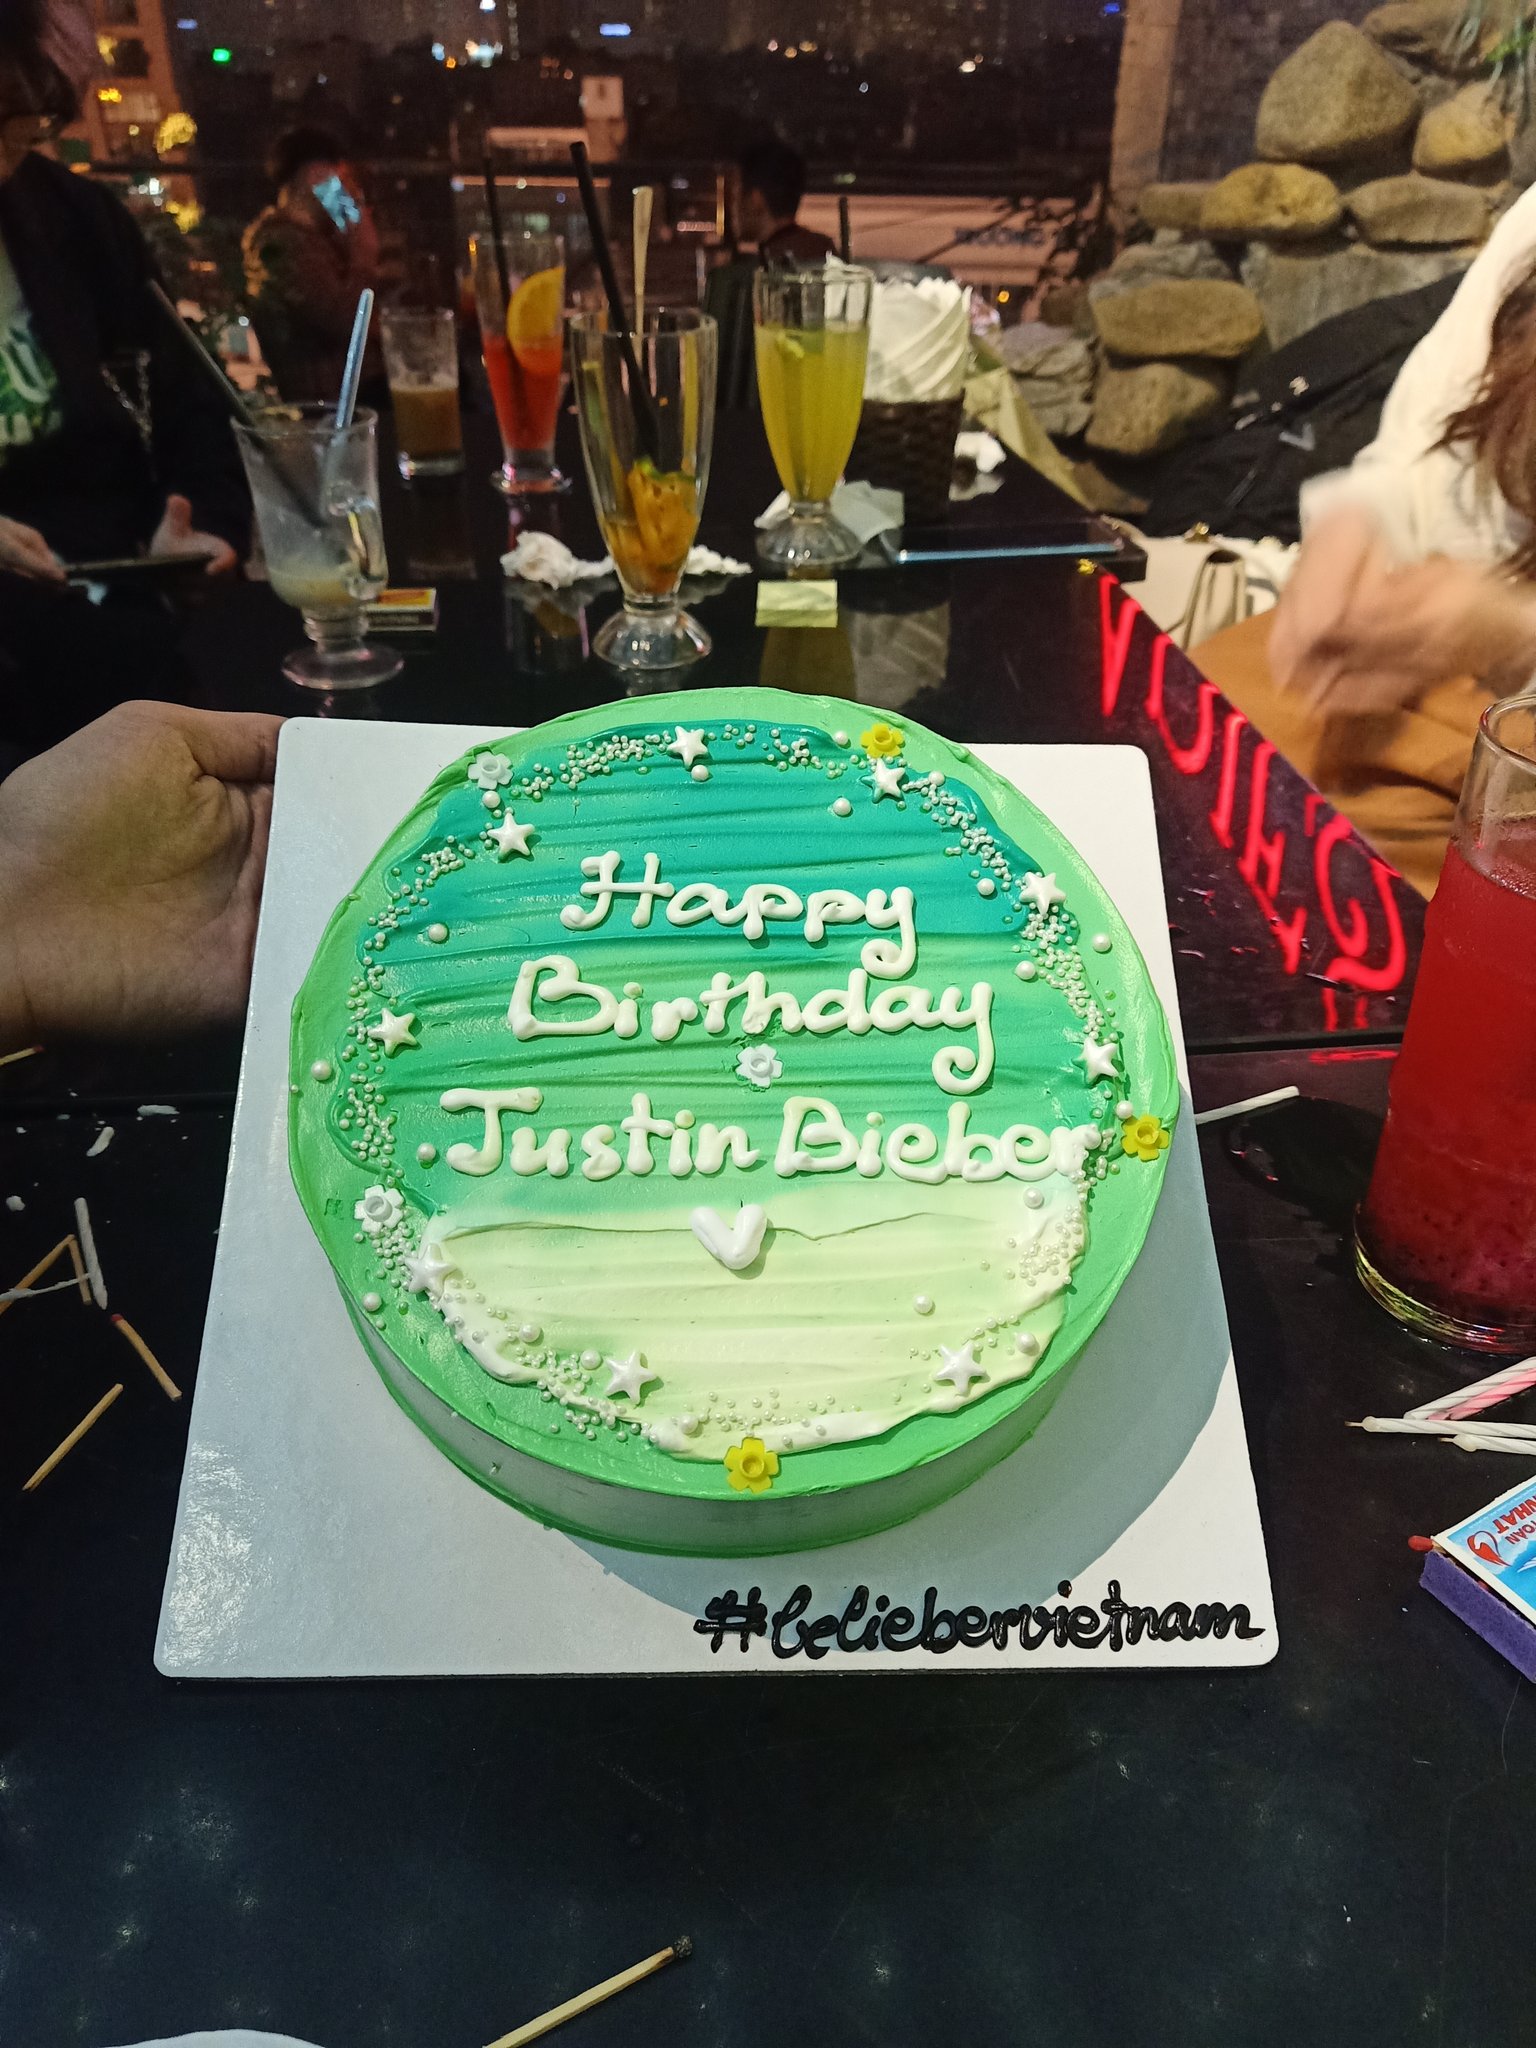 Happy birthday Justin Bieber  